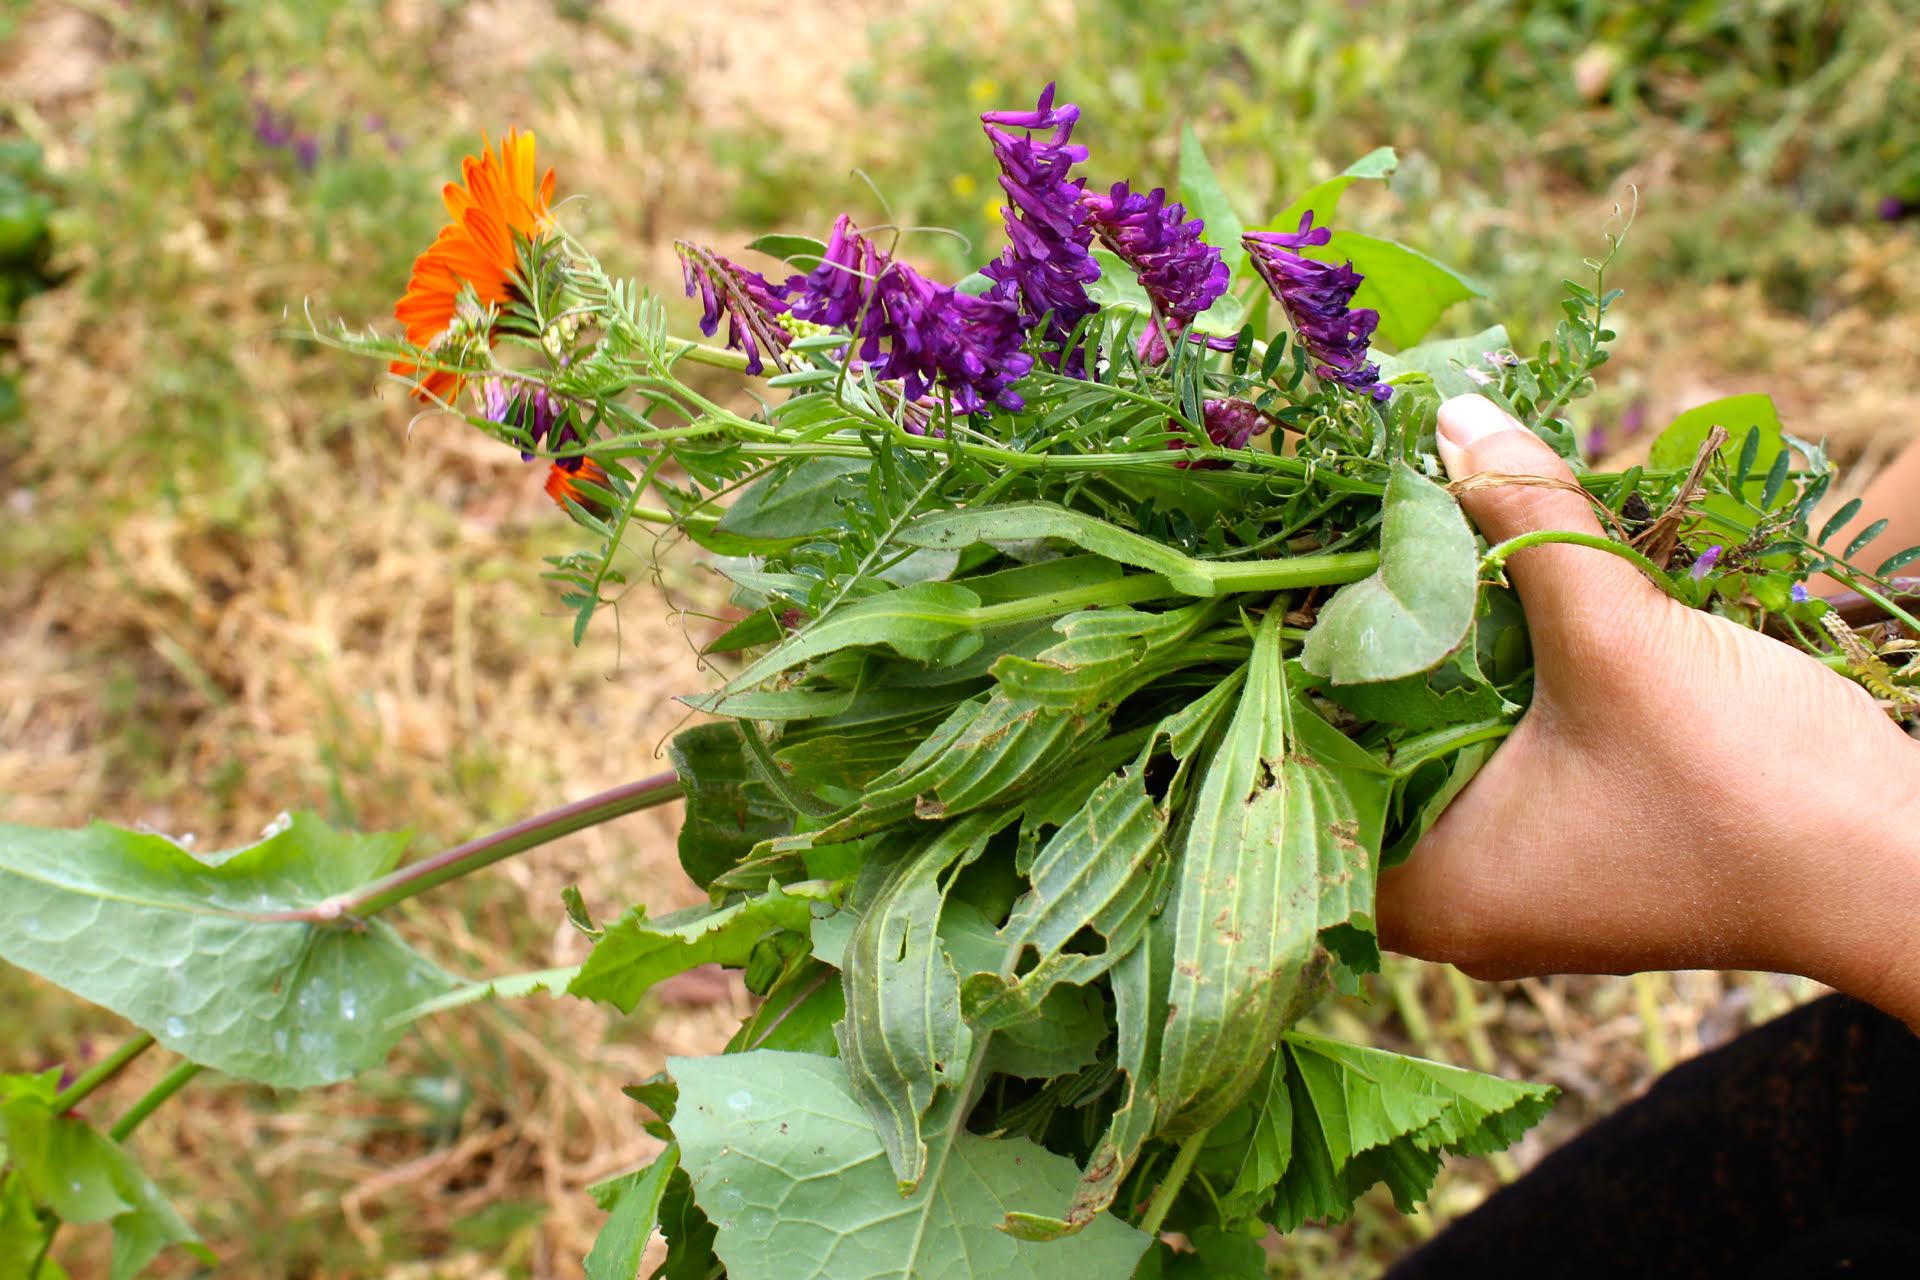 Edible weeds found around Oakland: Calendula, vetch and plantago.